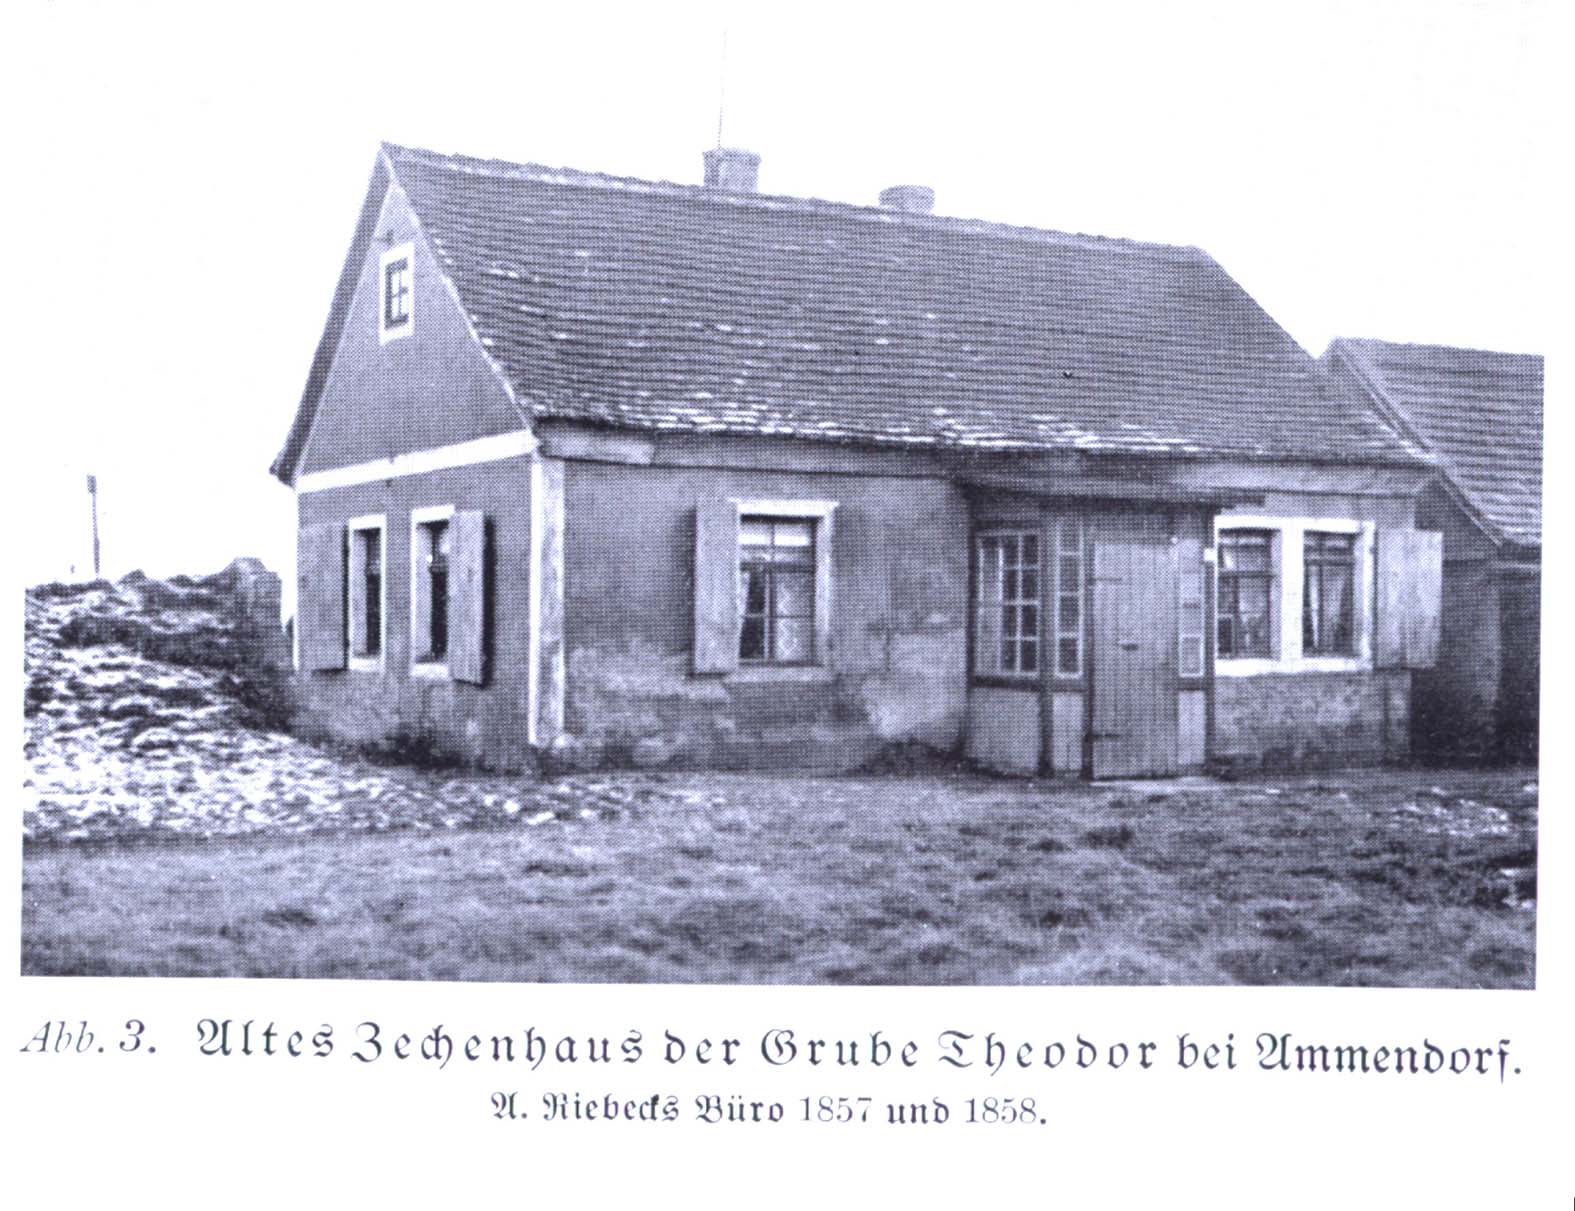 1857 Grube Theodor in Ammendorf (ca. 1857)